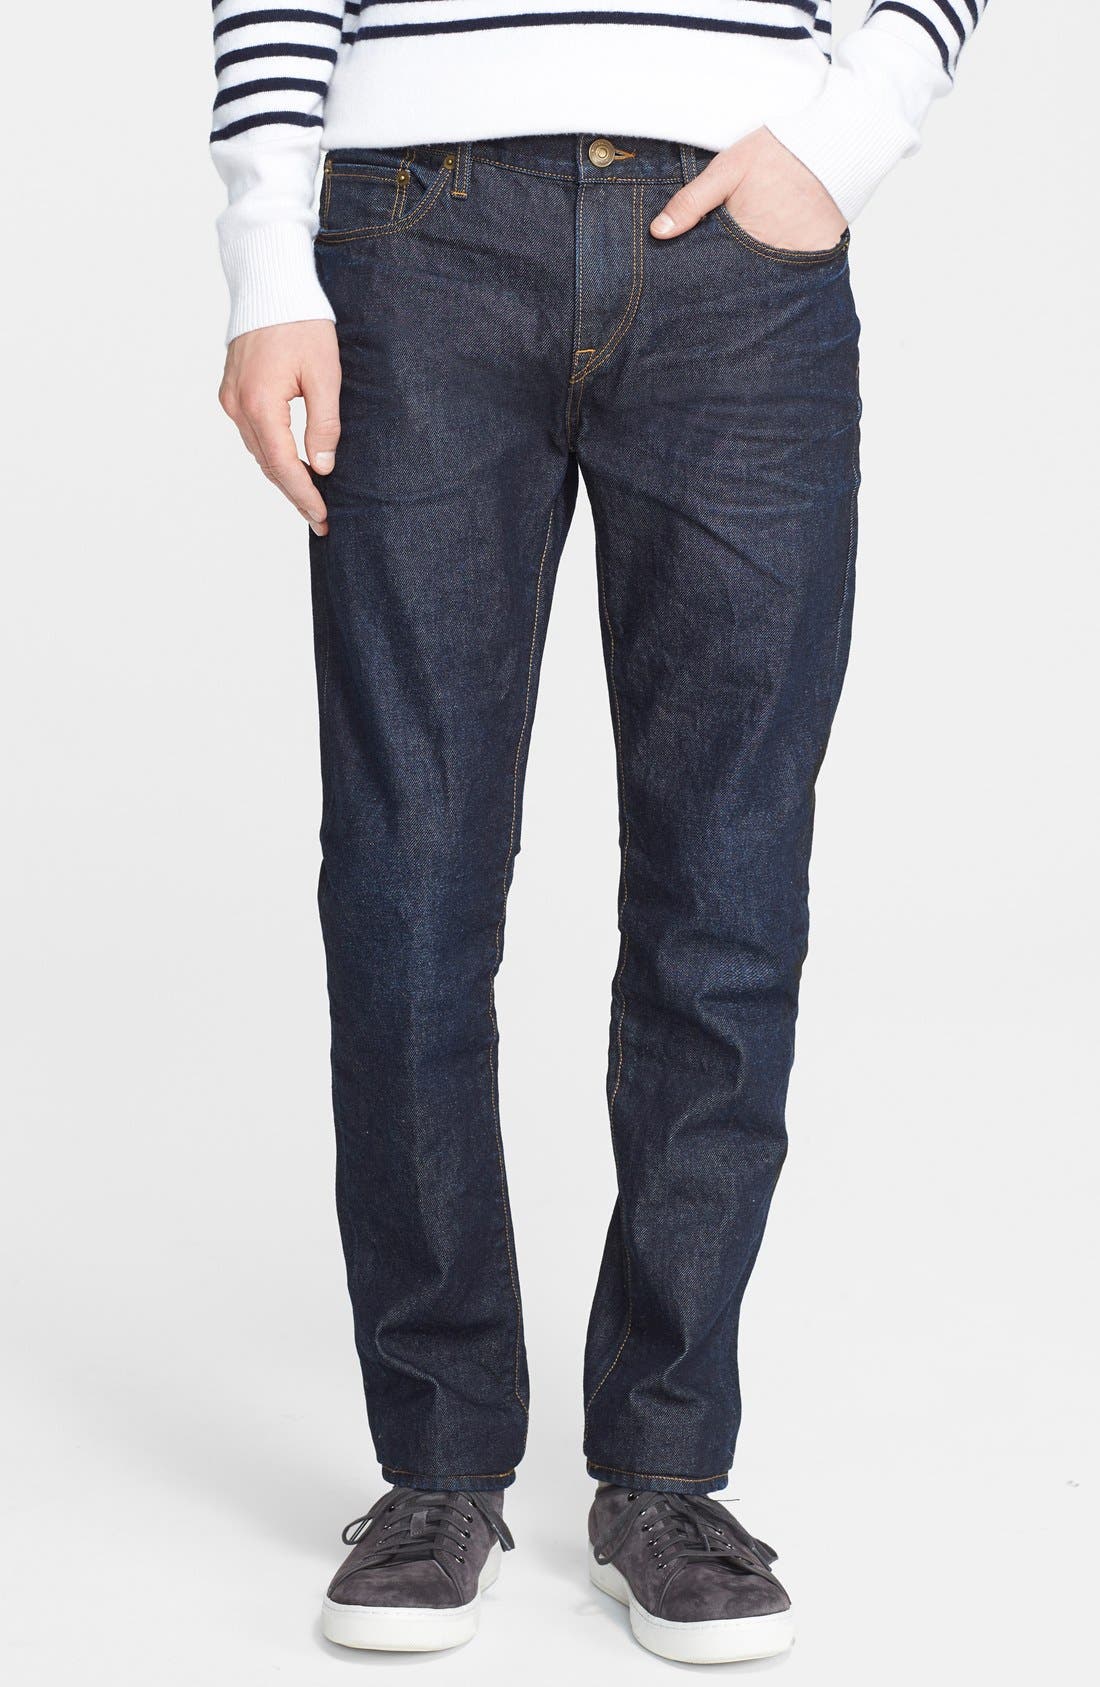 Burberry Brit Slim Fit Jeans (Mid 